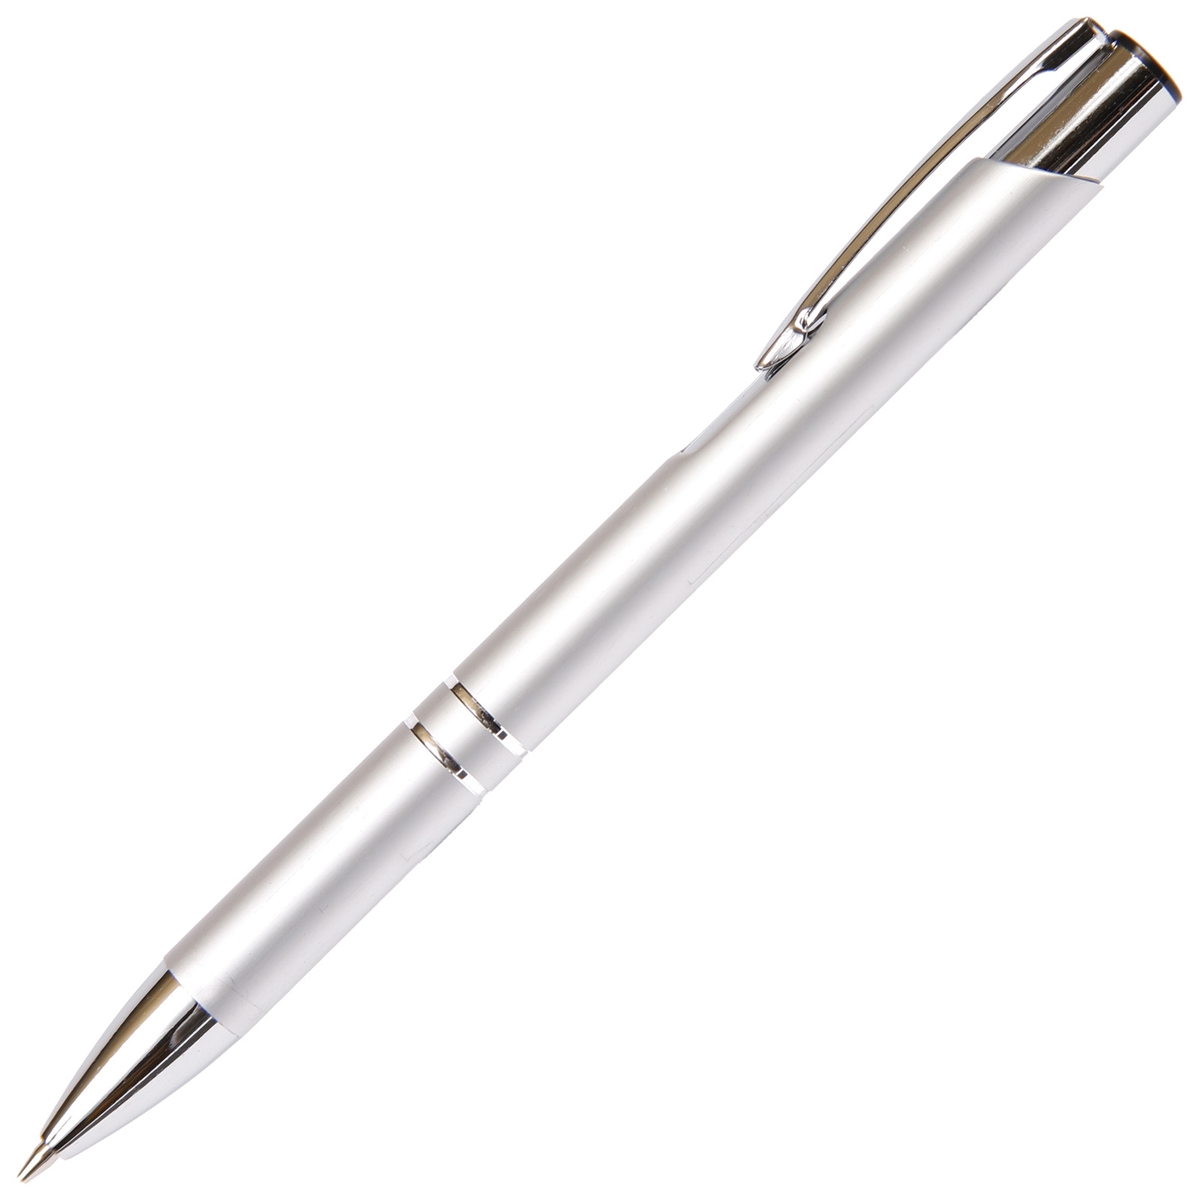 B204 - Silver Pencil